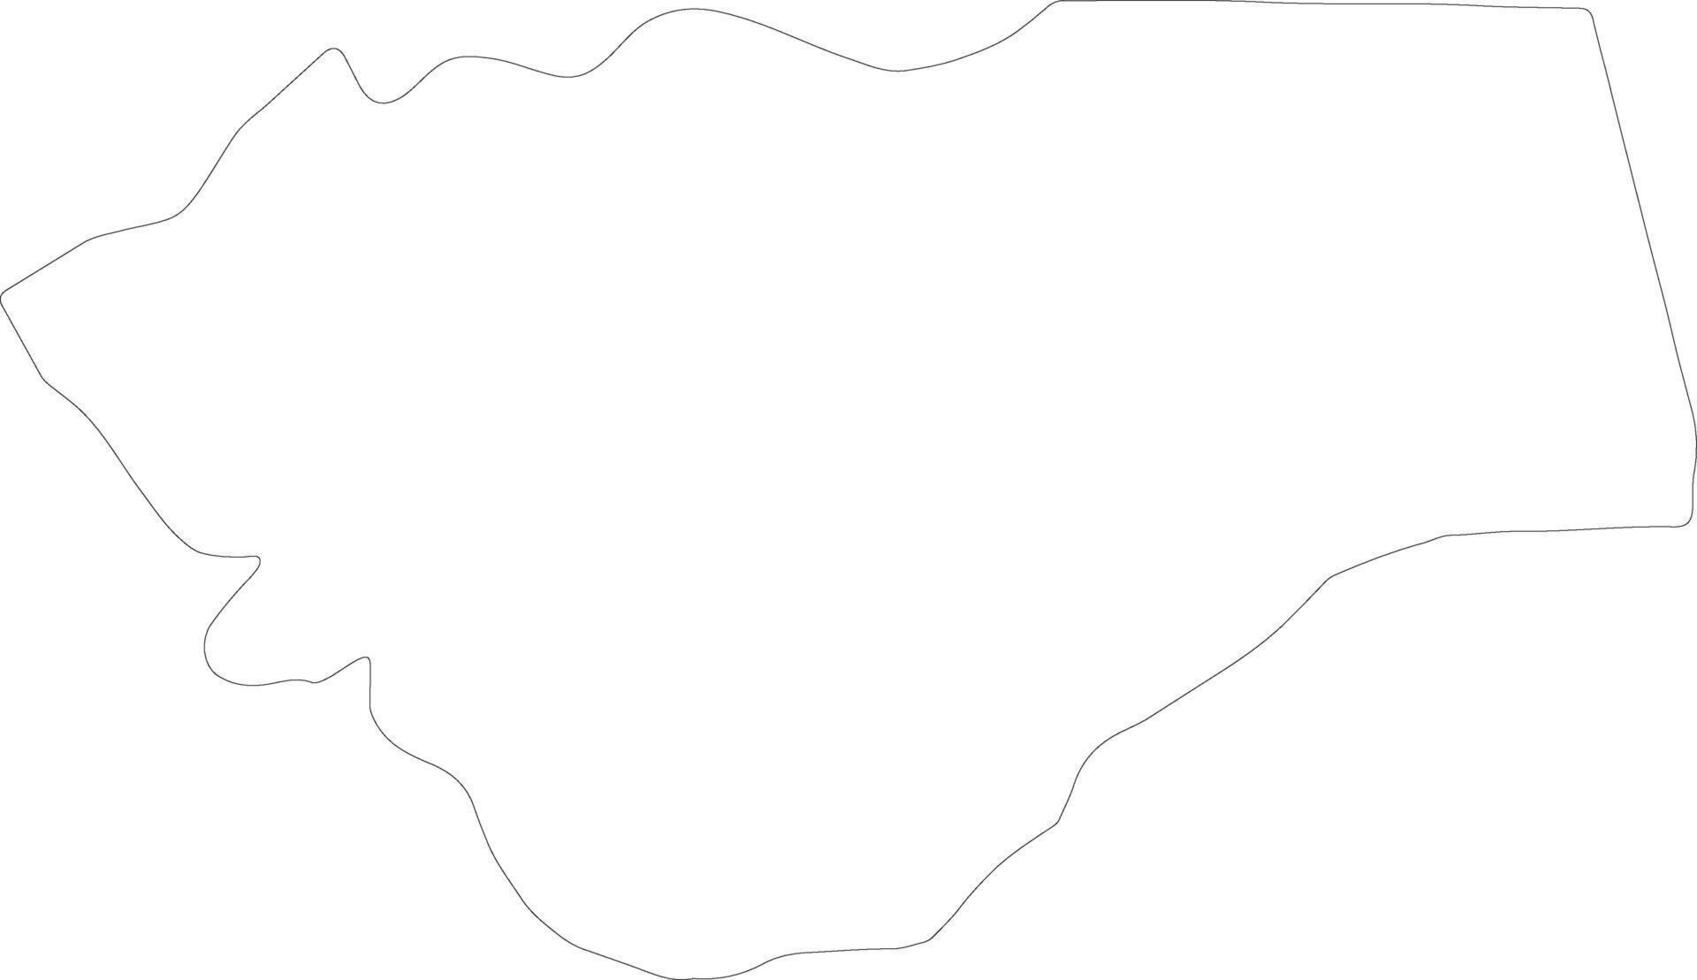 Zomba Malawi outline map vector